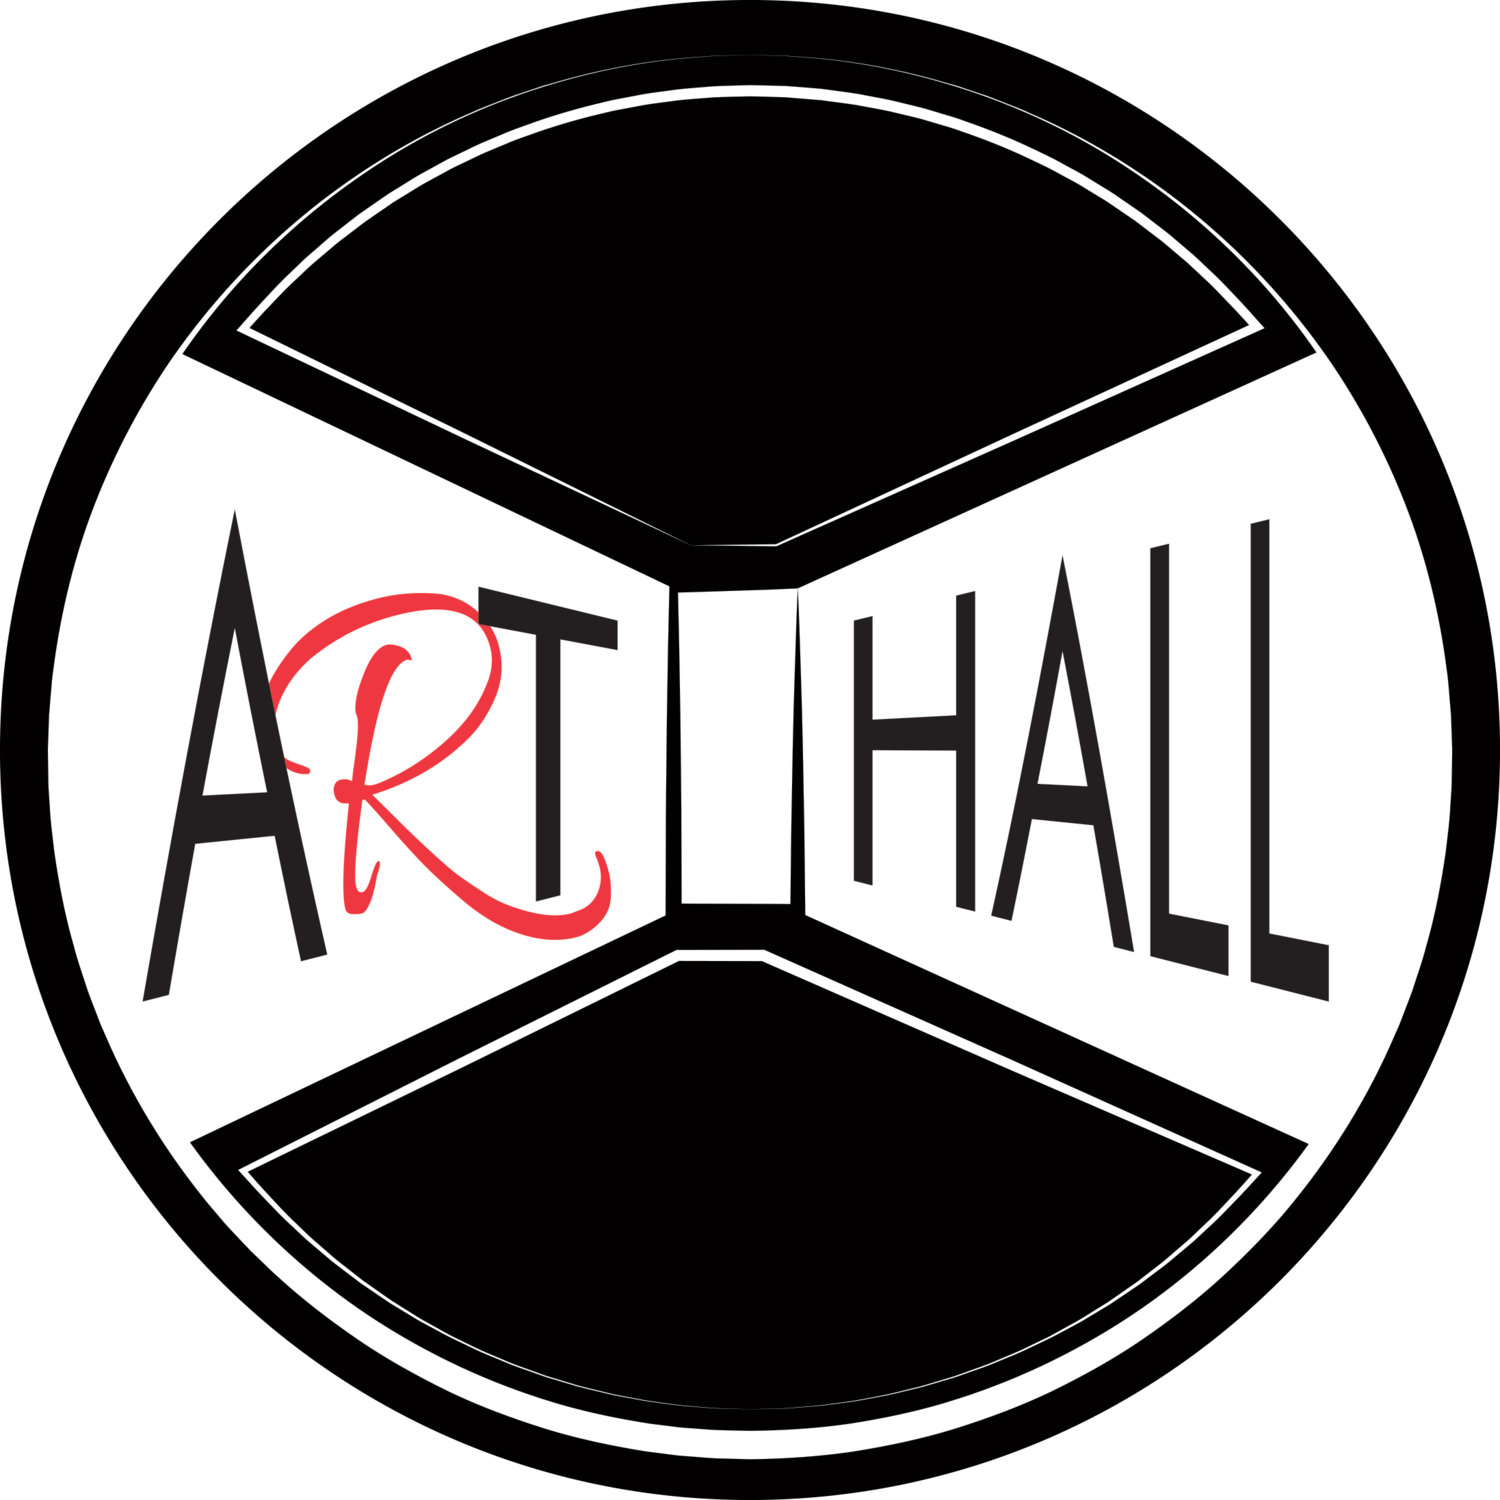 The Art Hall